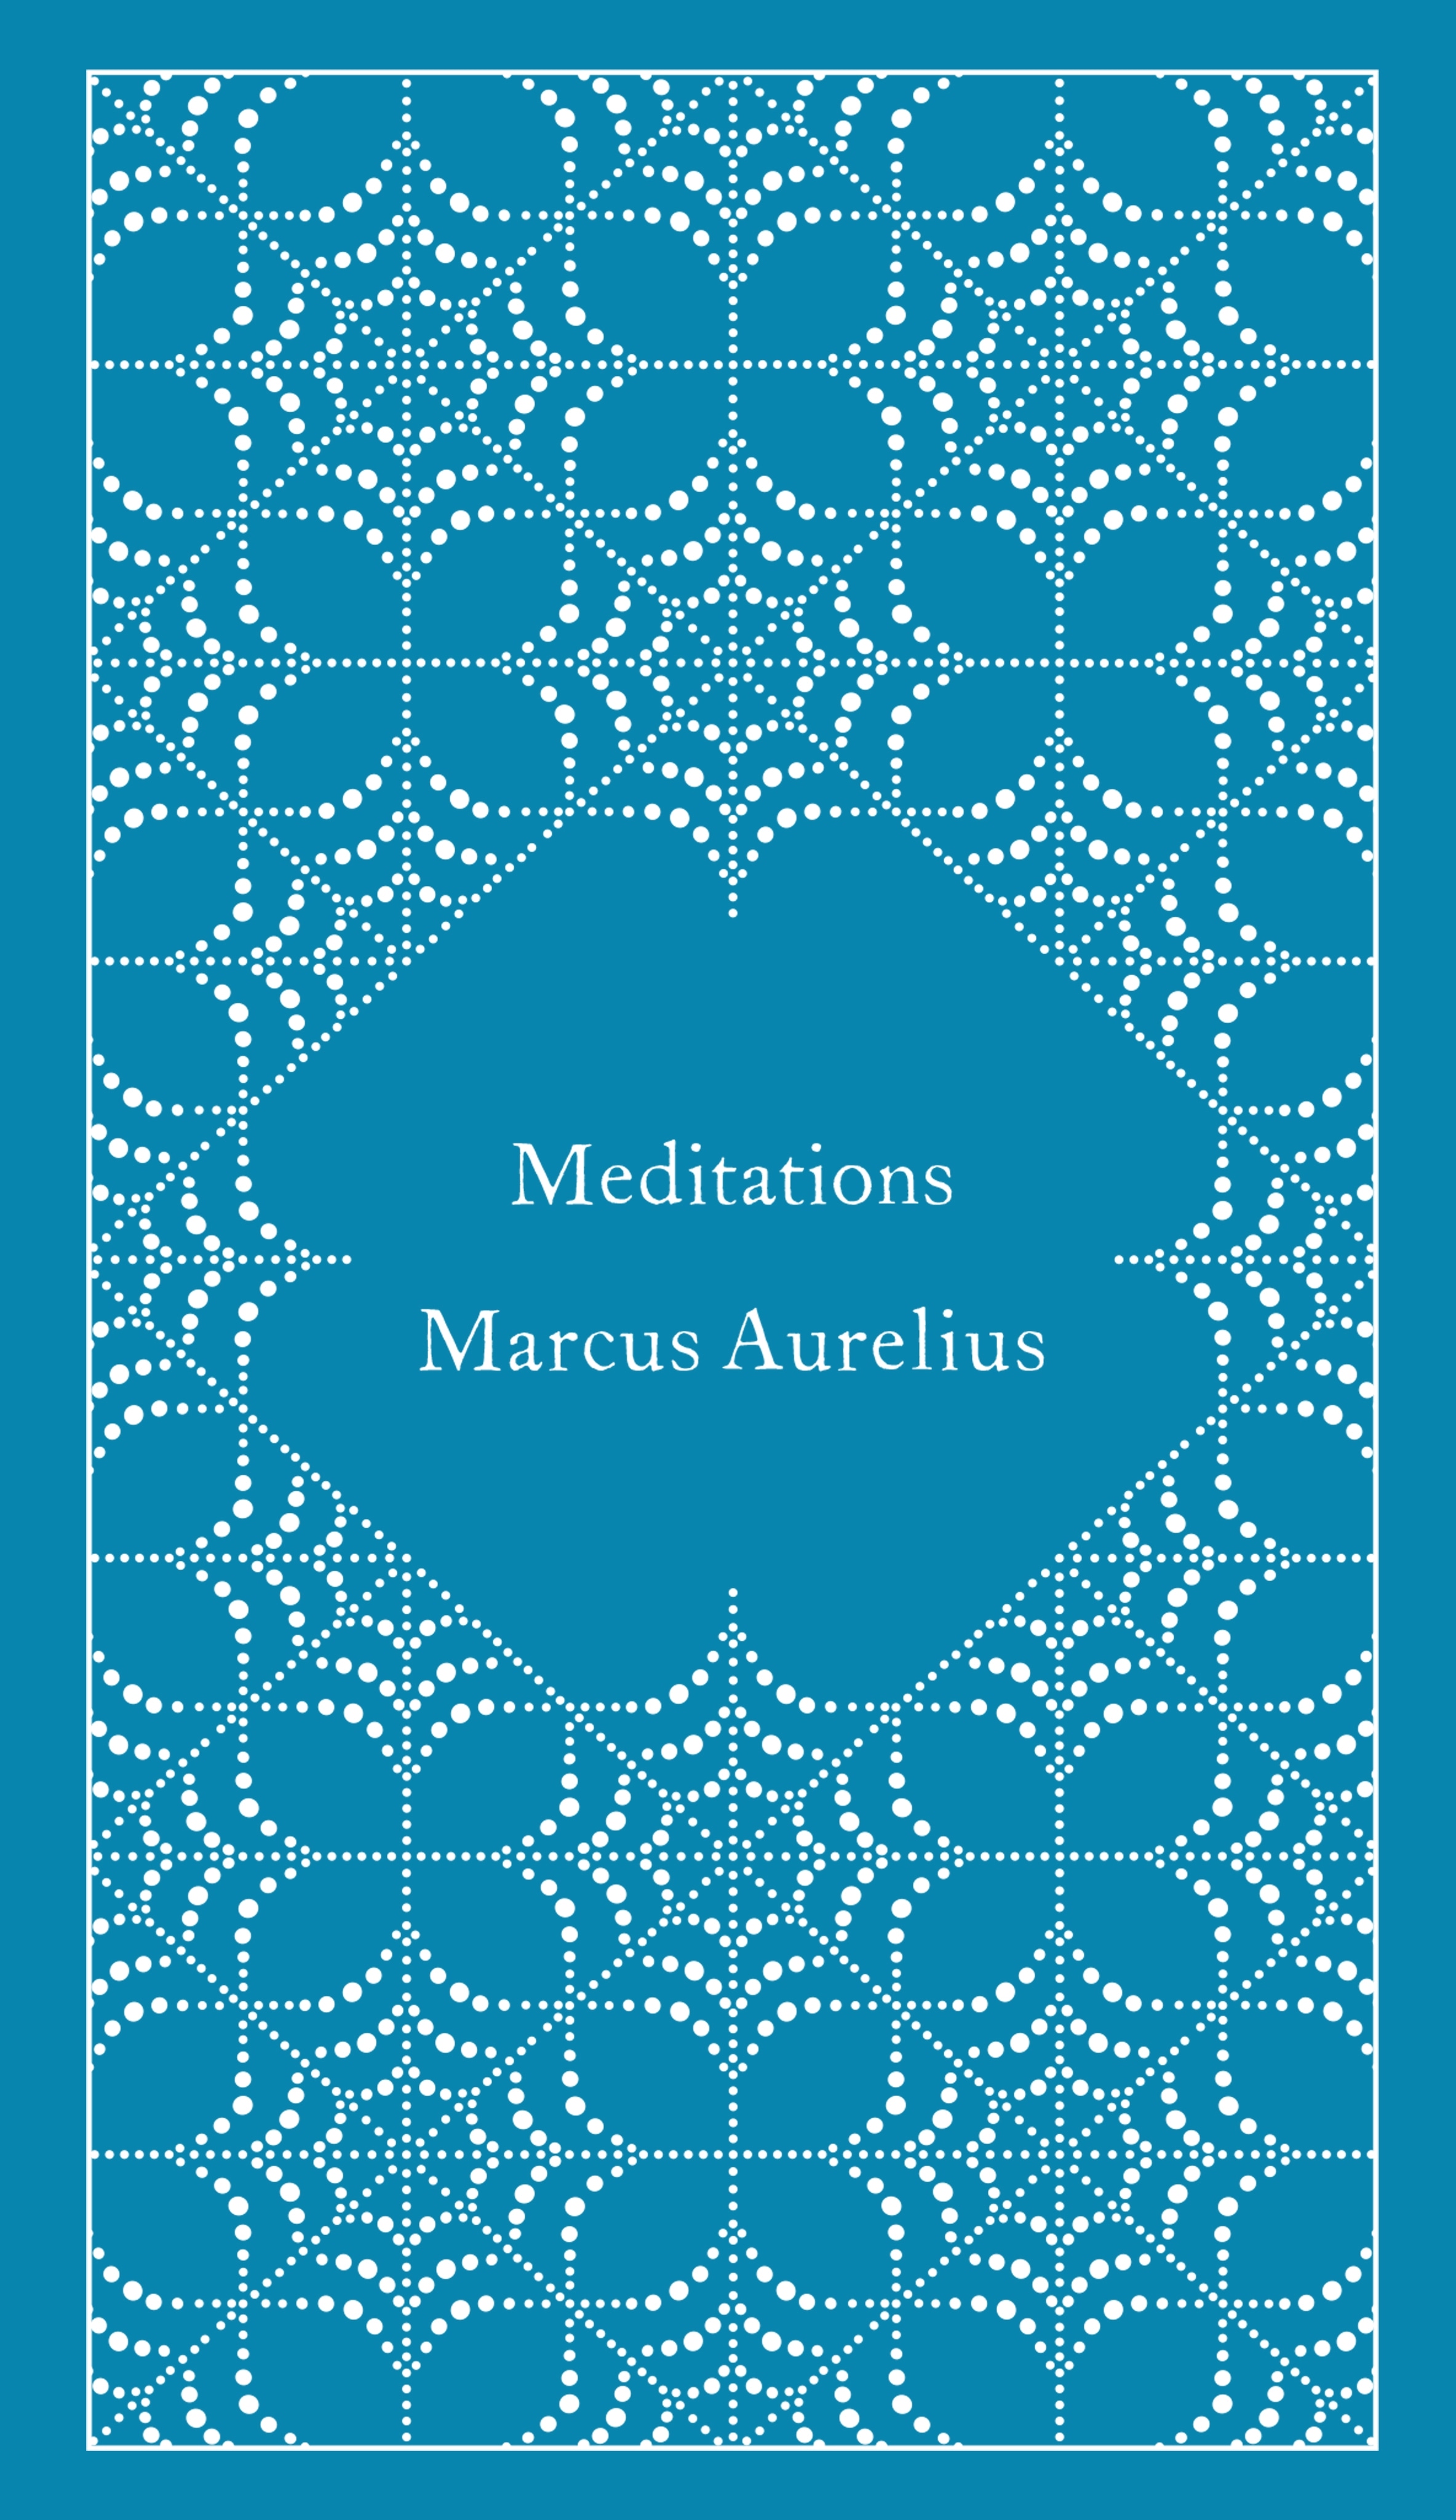 Book “Meditations” by Marcus Aurelius, Diskin Clay — November 6, 2014